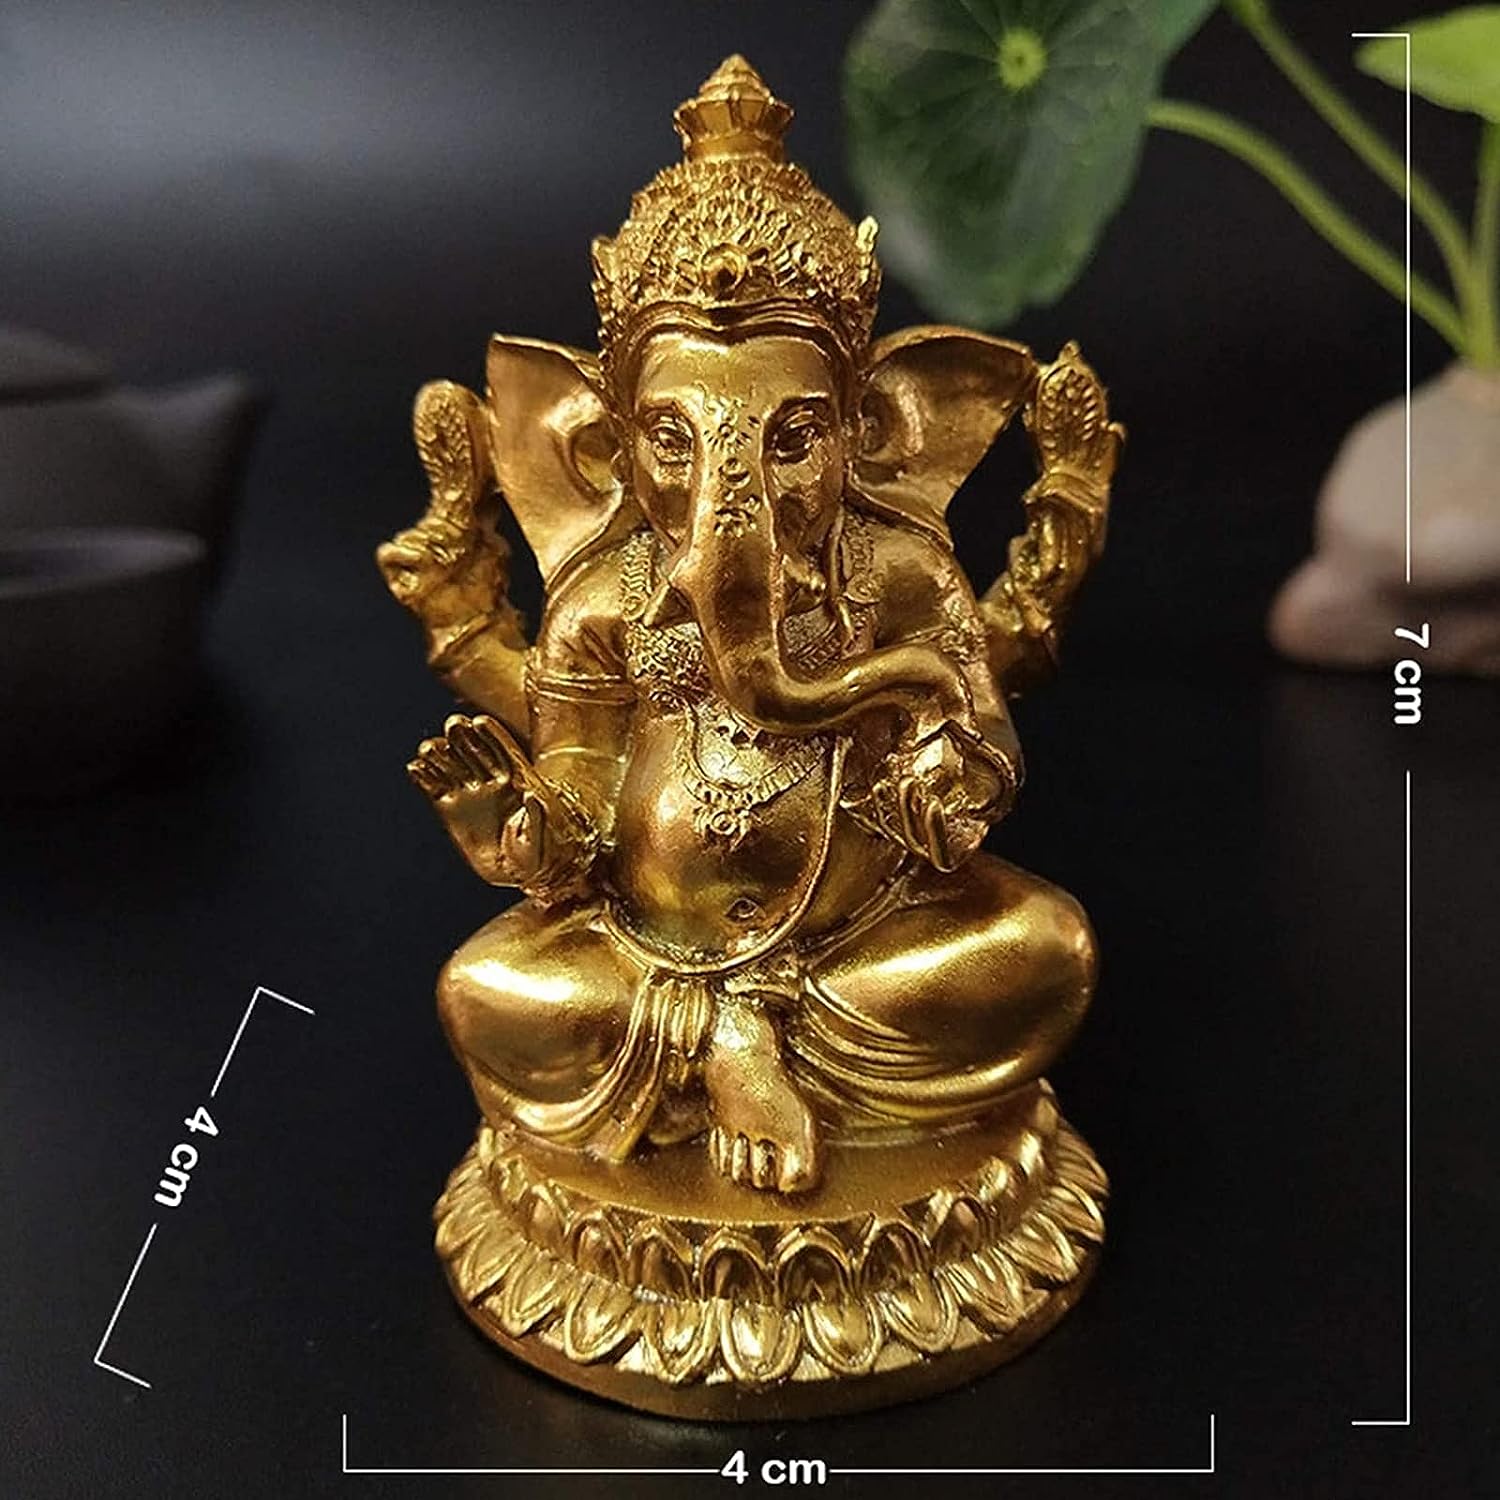 YODOOLTLY Gold Lord Ganesha Statues- Hindu Elephant God Statue Resin Sculpture Indian Ganesh Buddha Figurine Handmade Gift Decoration Ornaments for Home, Garden, Car